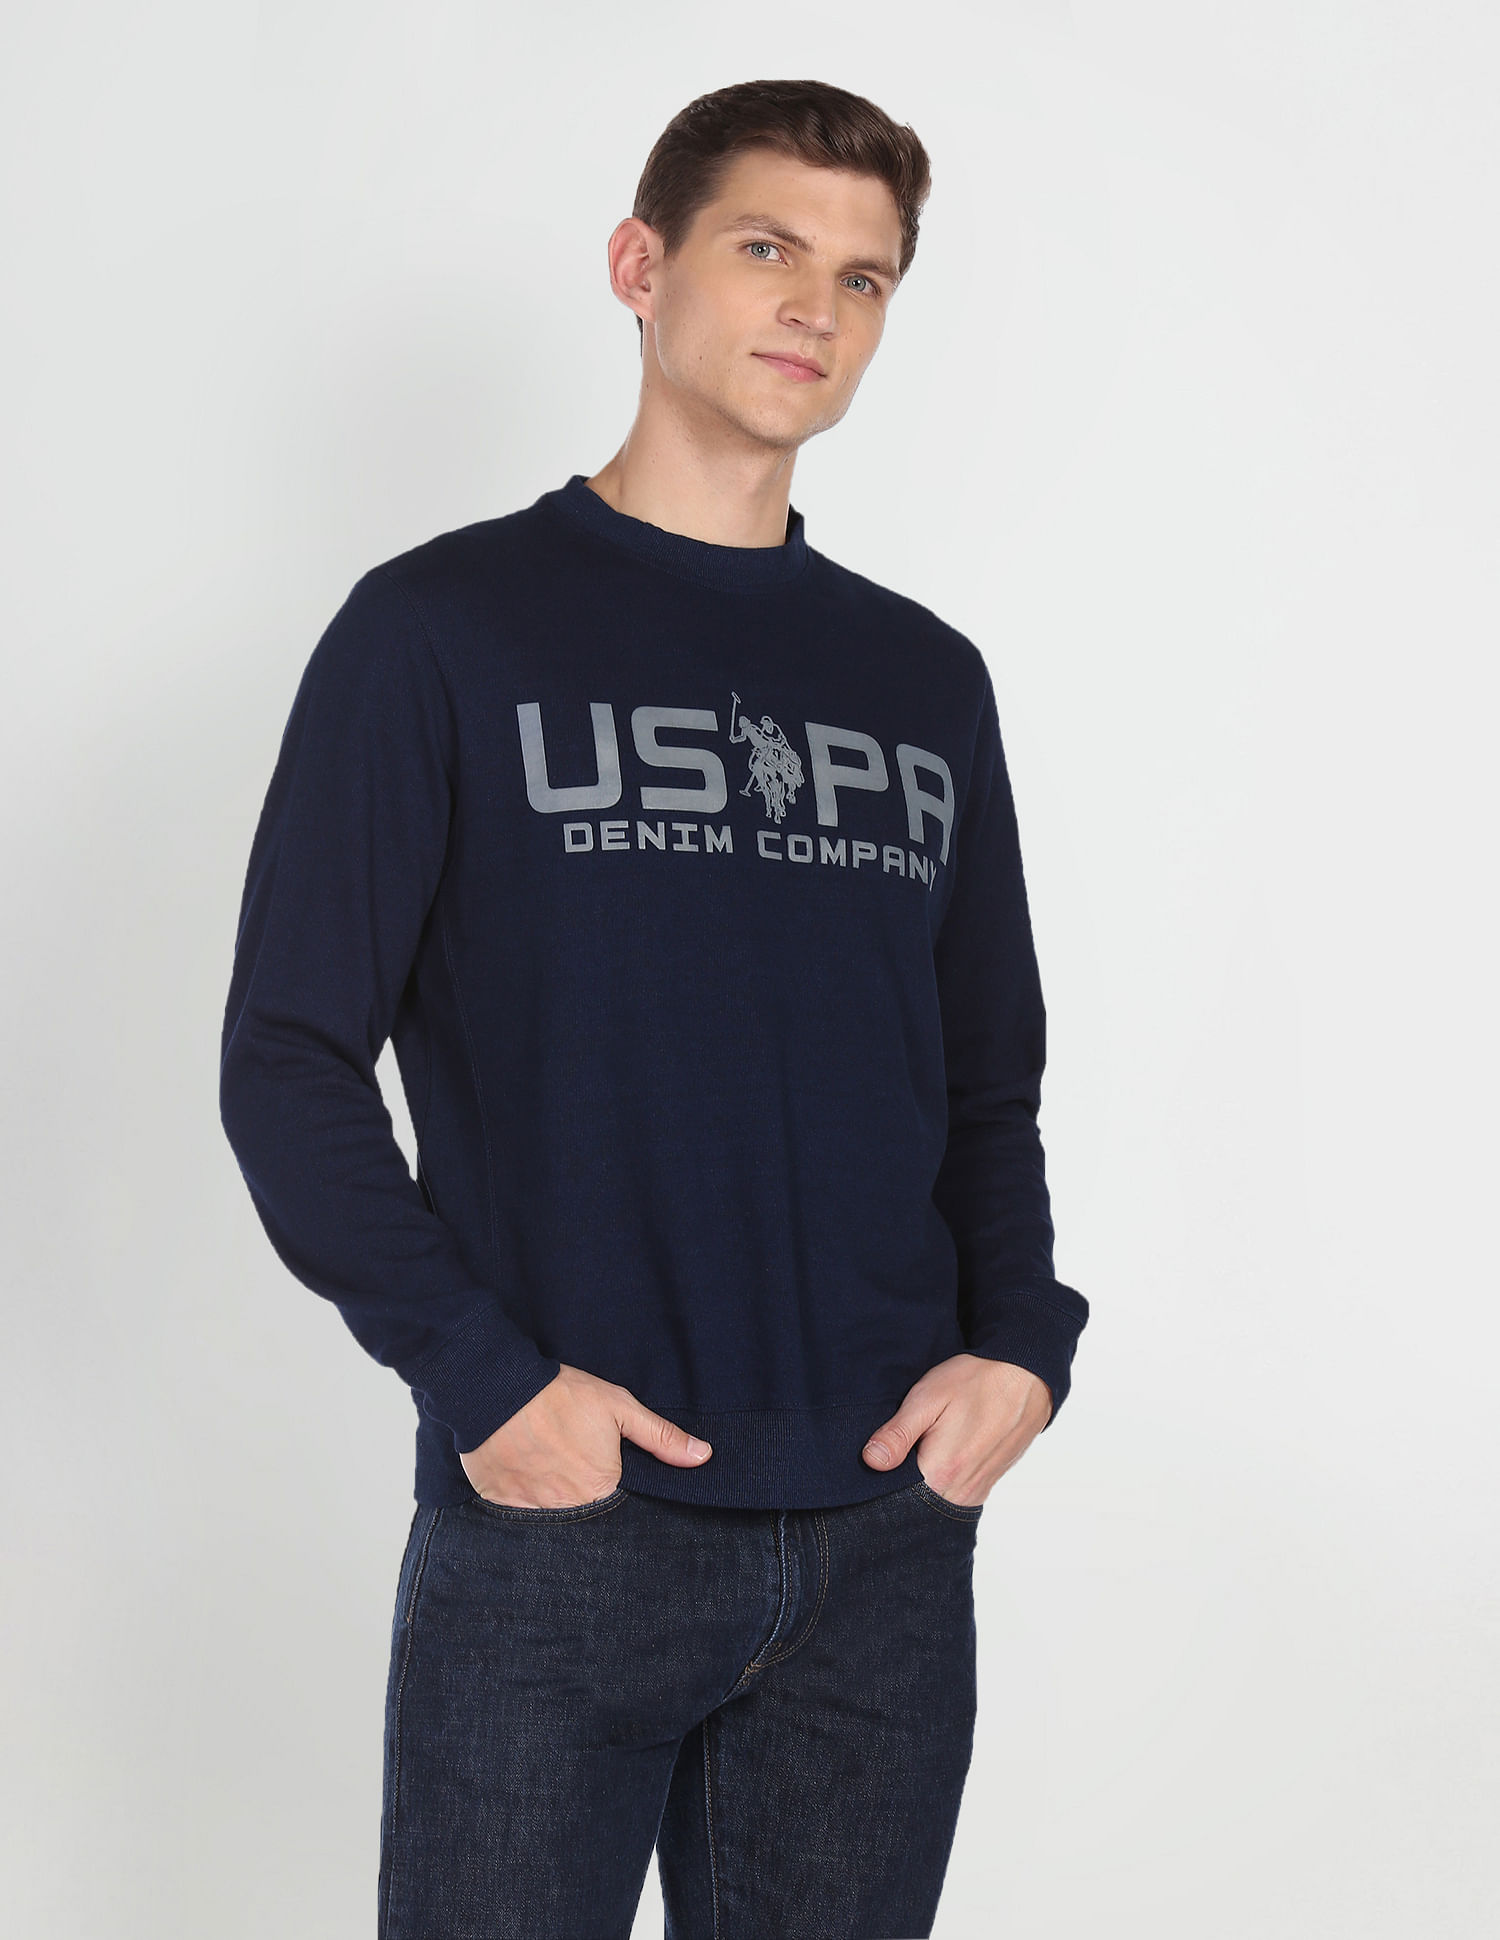 Buy U.S. Polo Assn. Kids Solid Crew Neck Cotton Sweatshirt - NNNOW.com